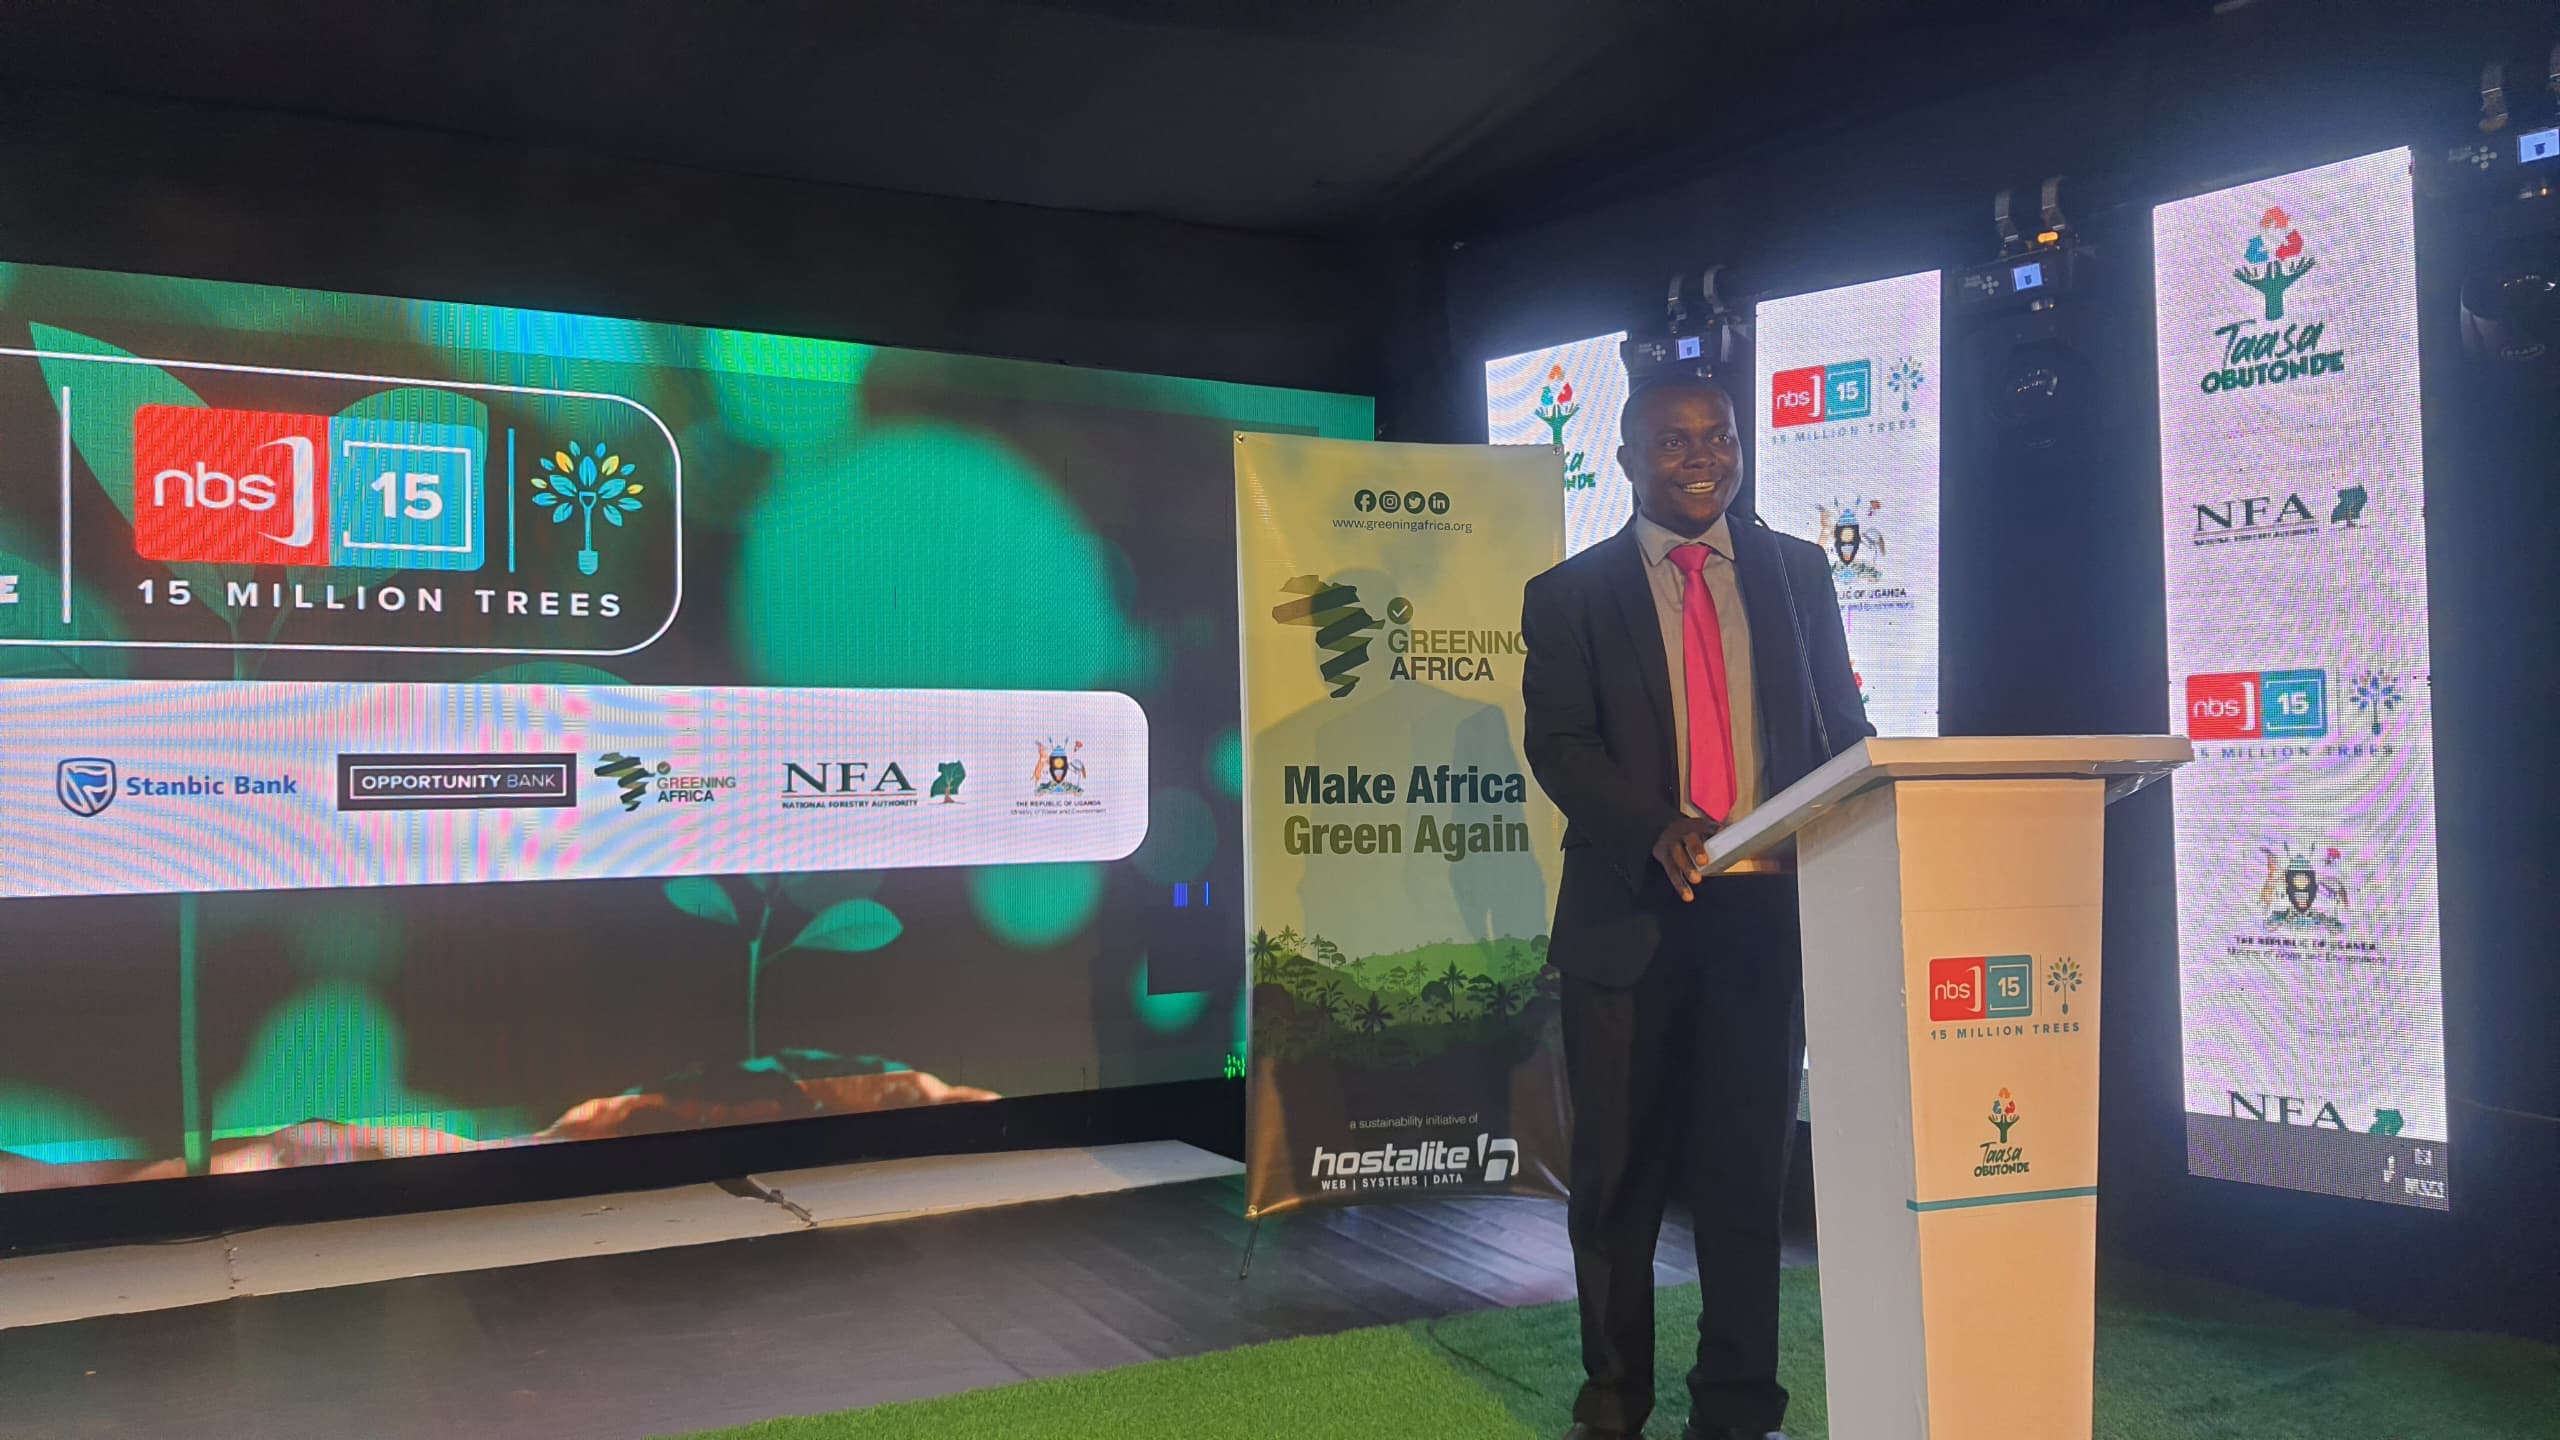 Greening Africa, NBS partner for the 15 Million Trees2